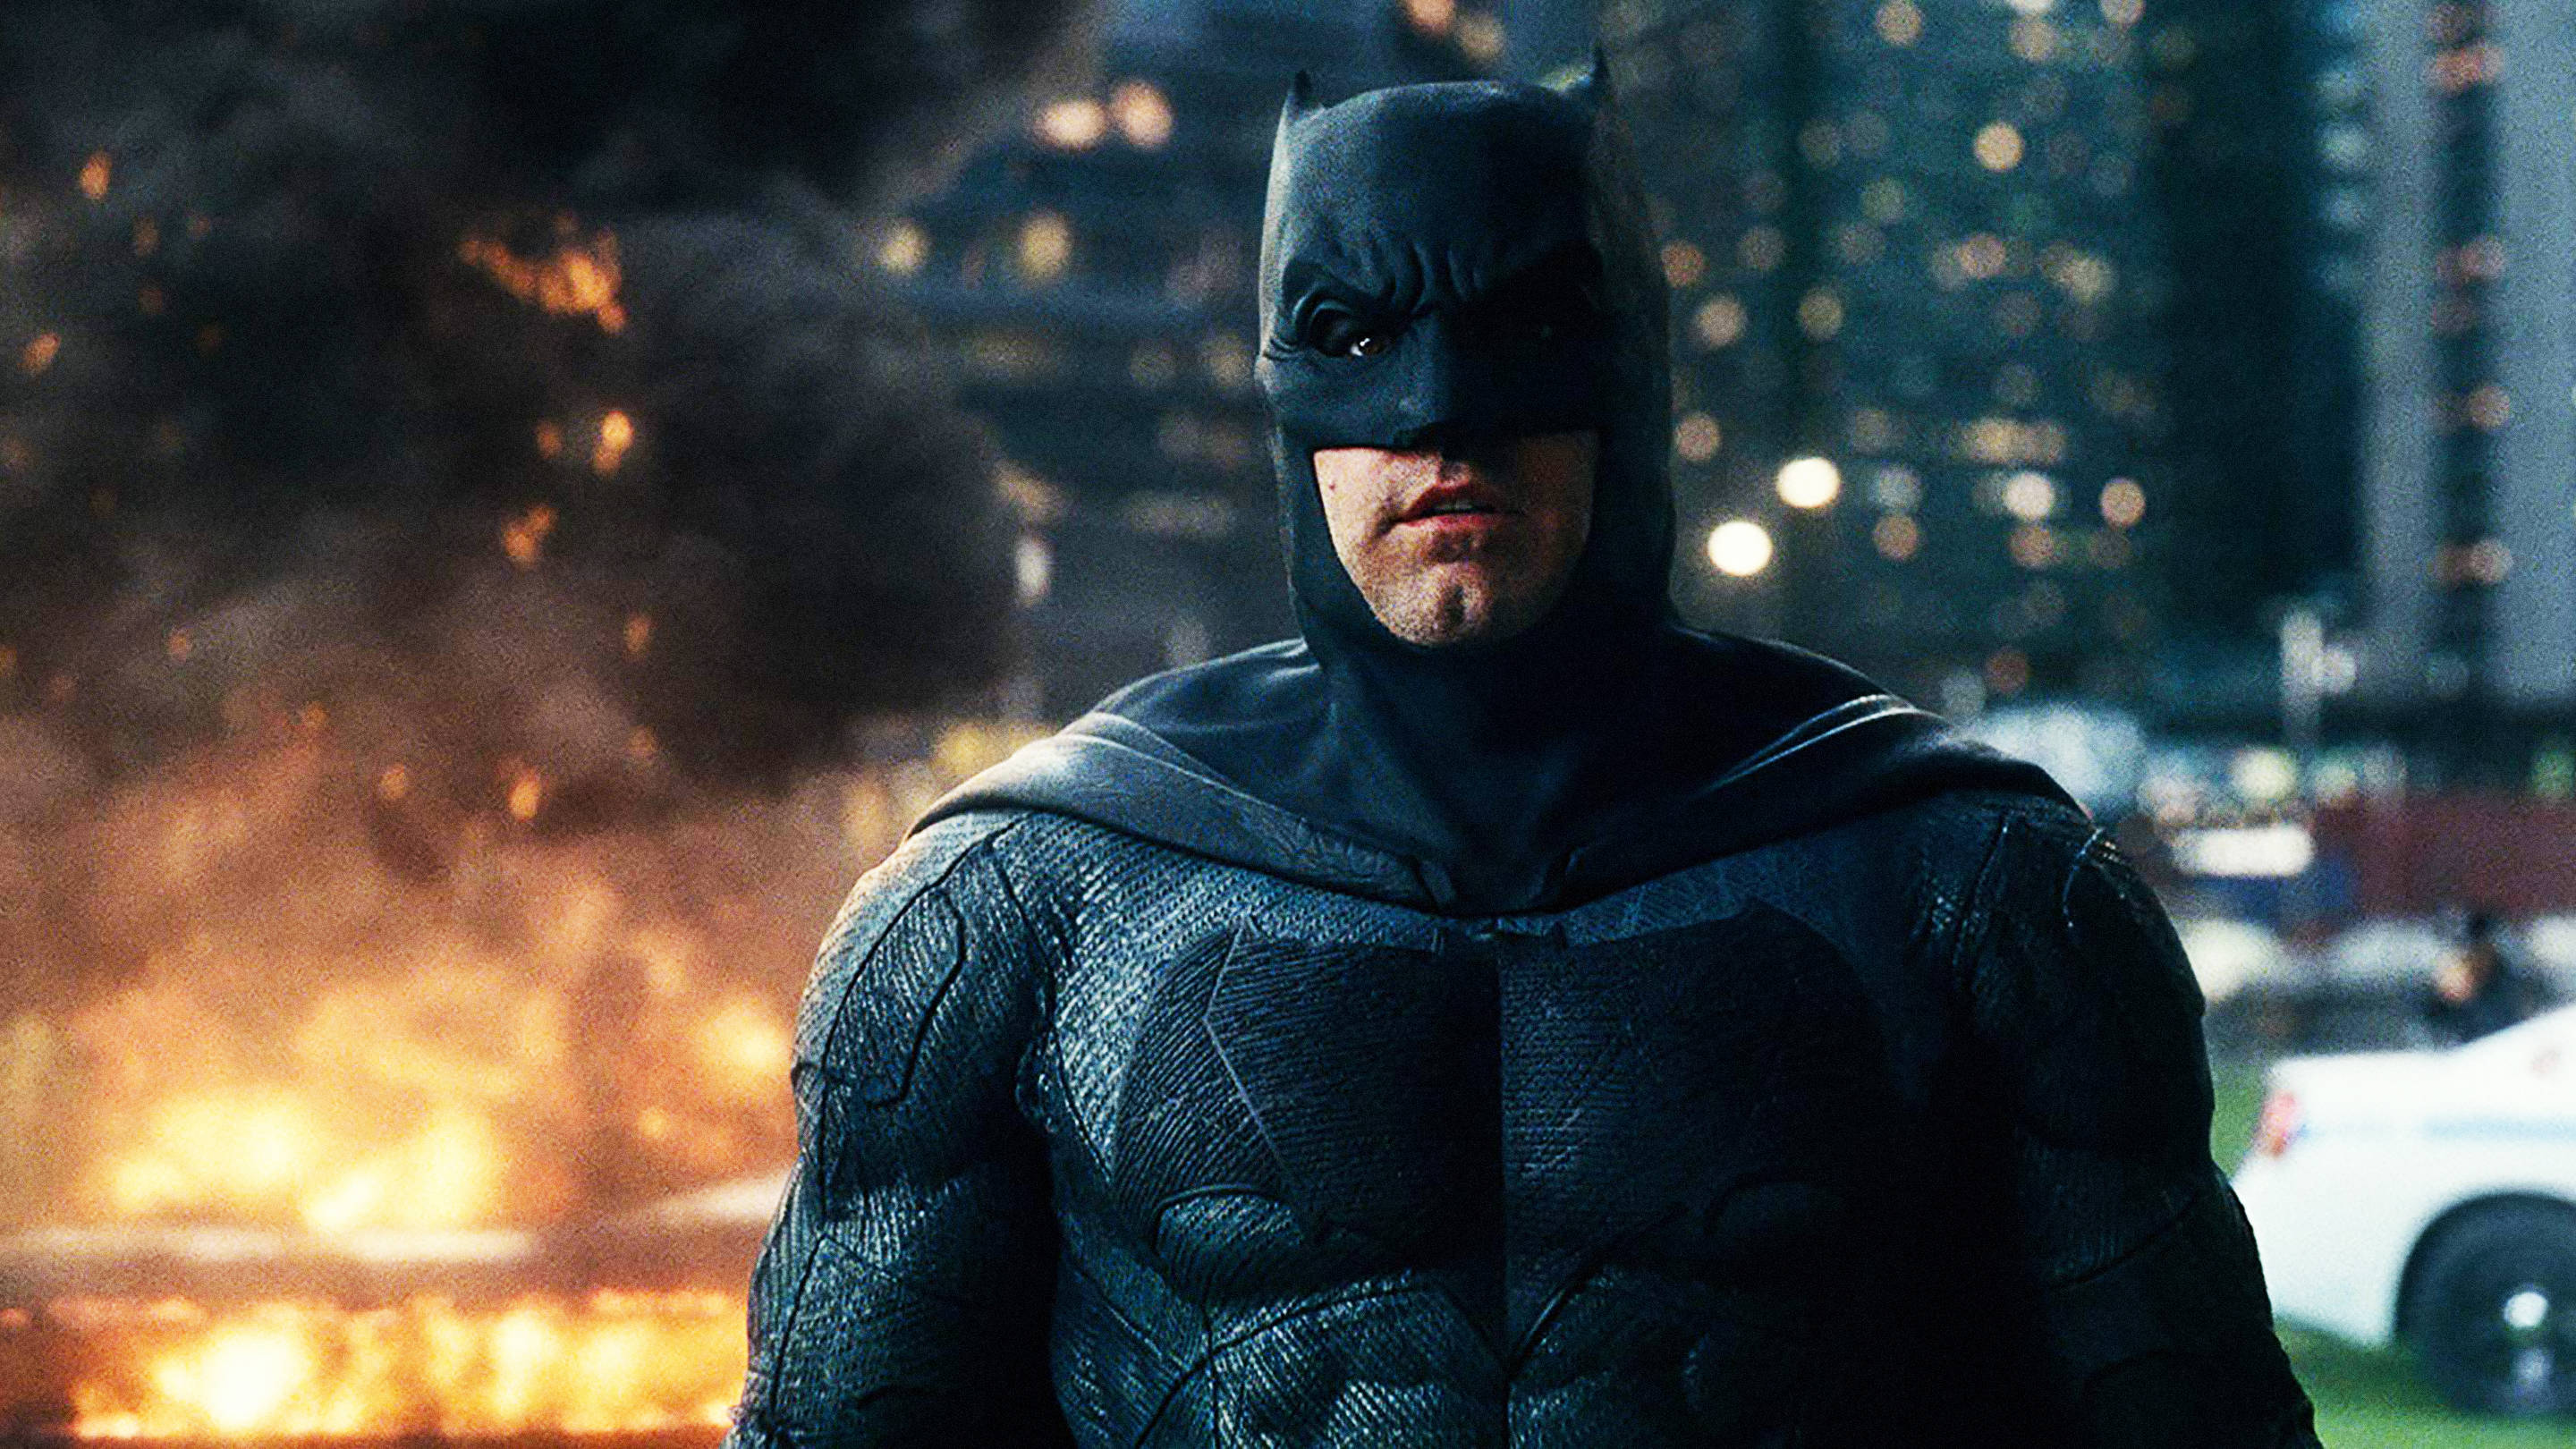 Ben Affleck as DC's Batman